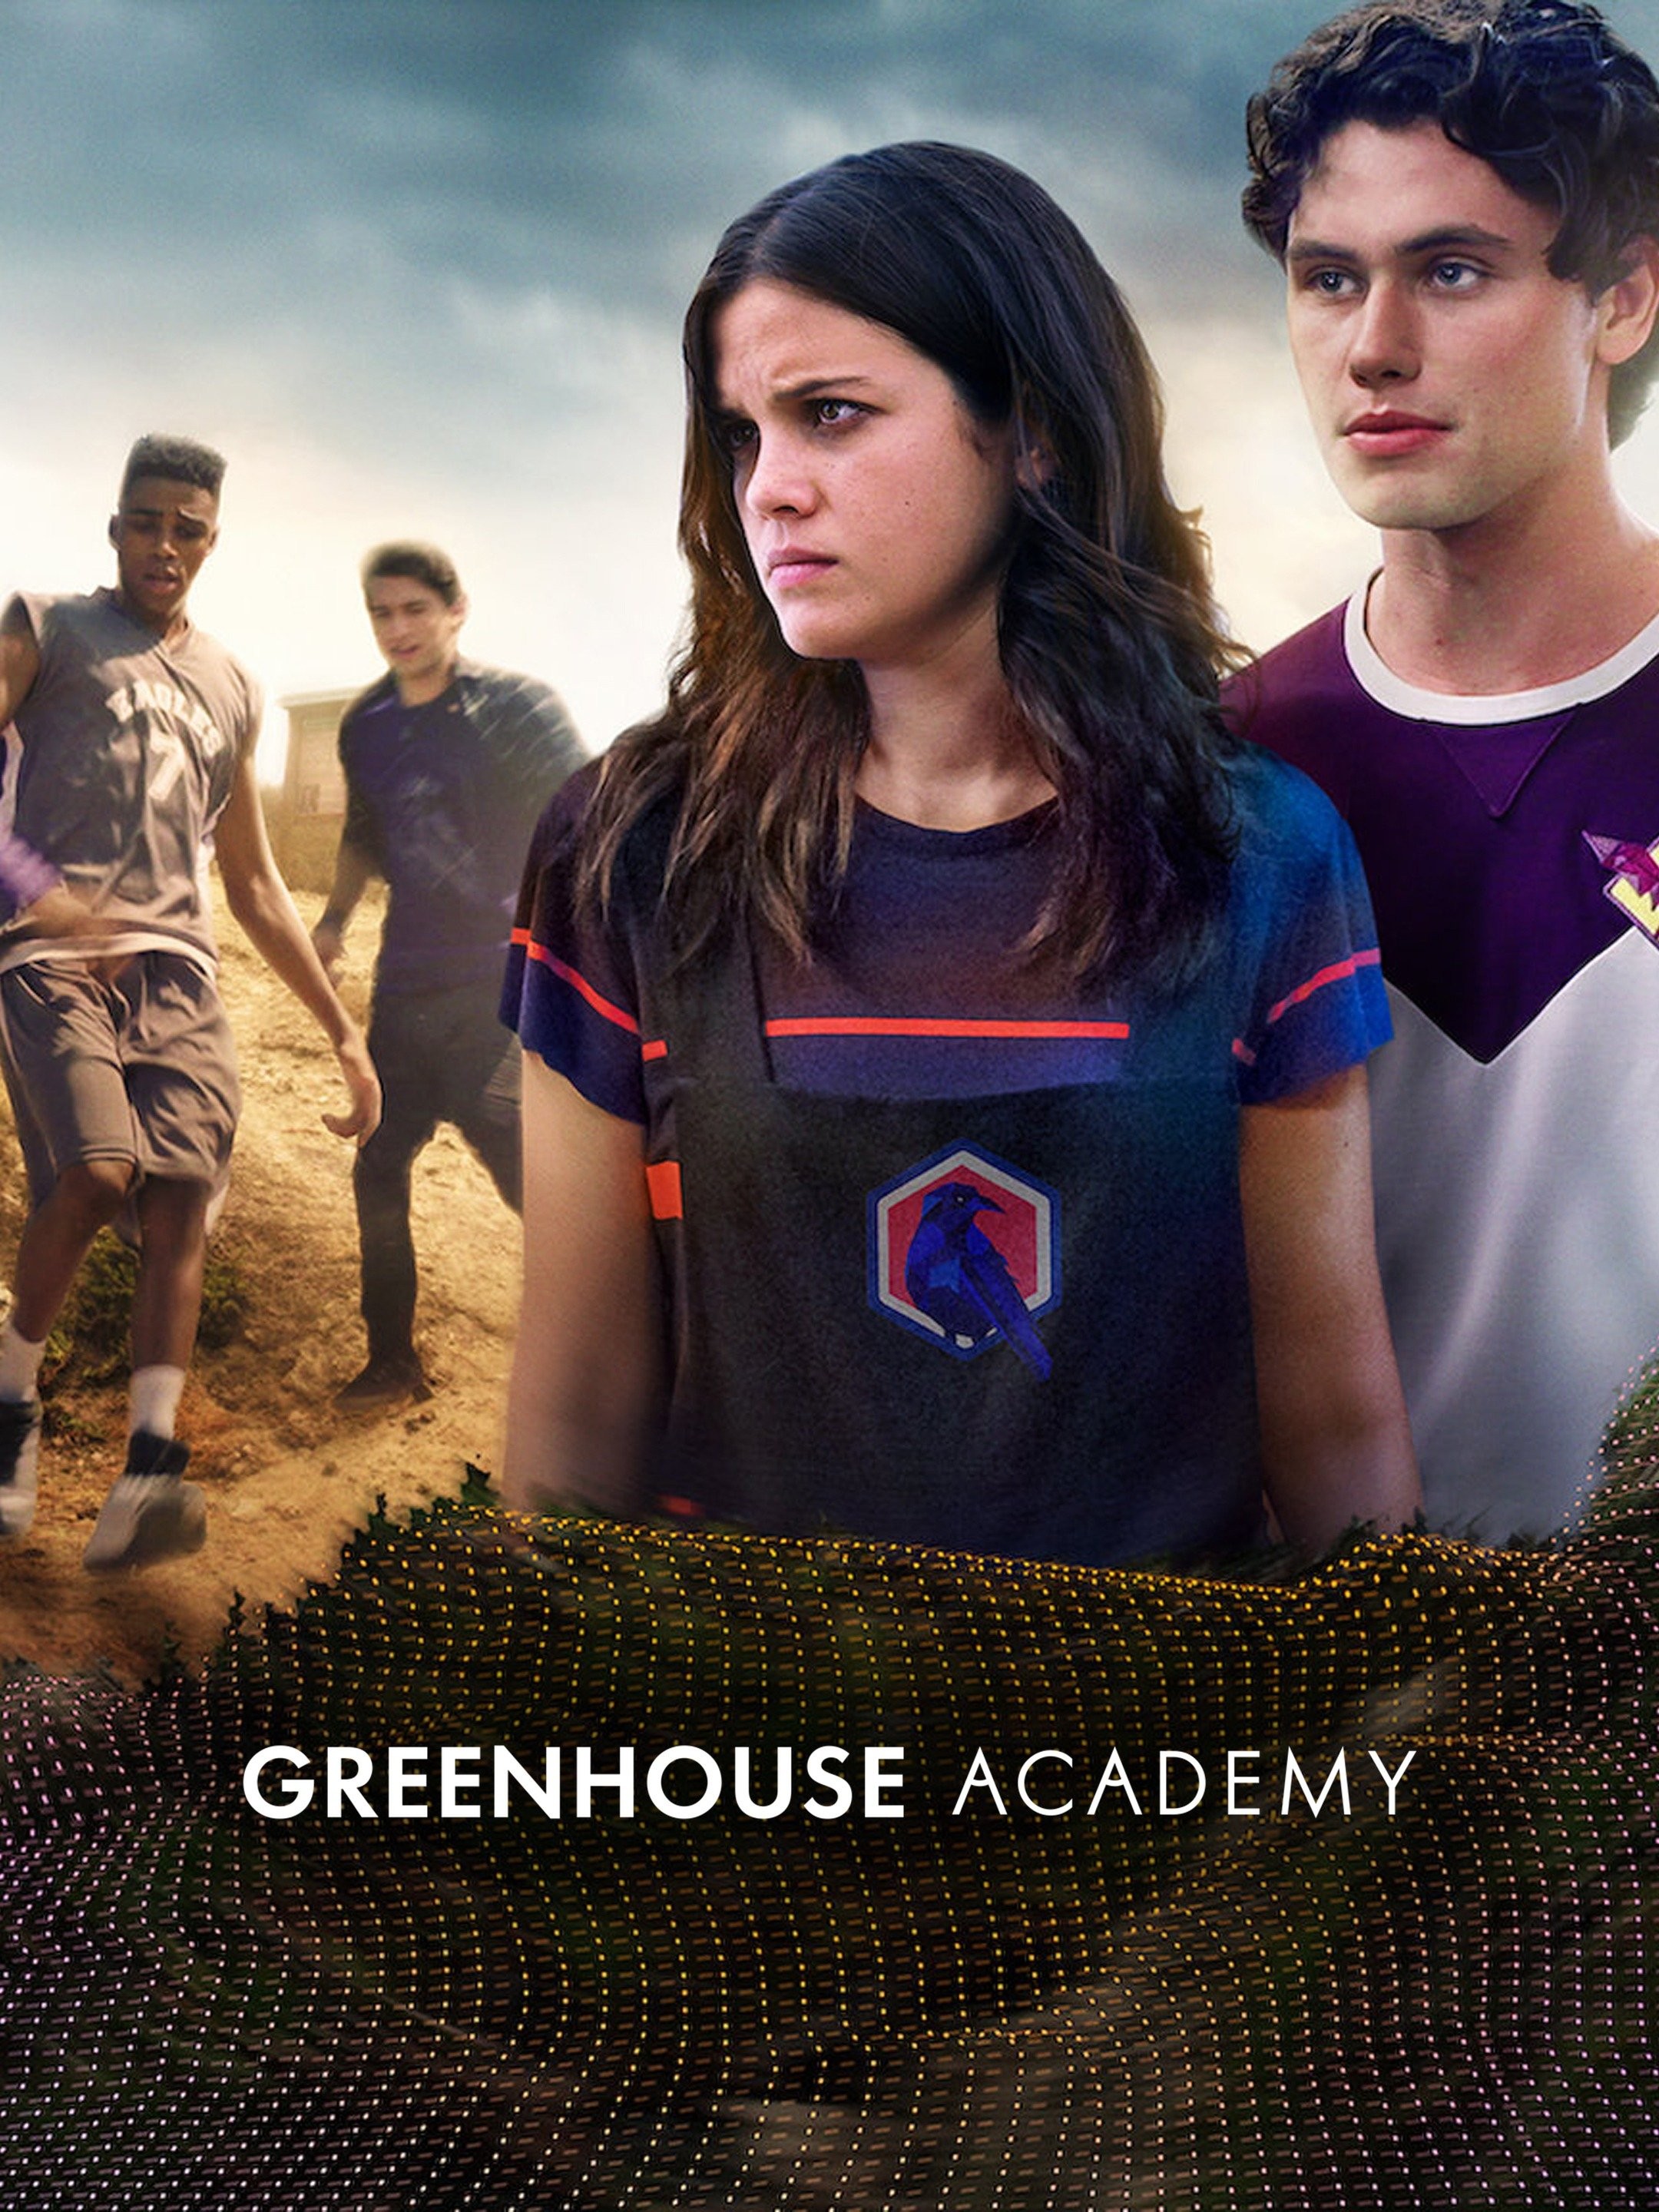 Greenhouse Academy The Hike (TV Episode 2019) - IMDb